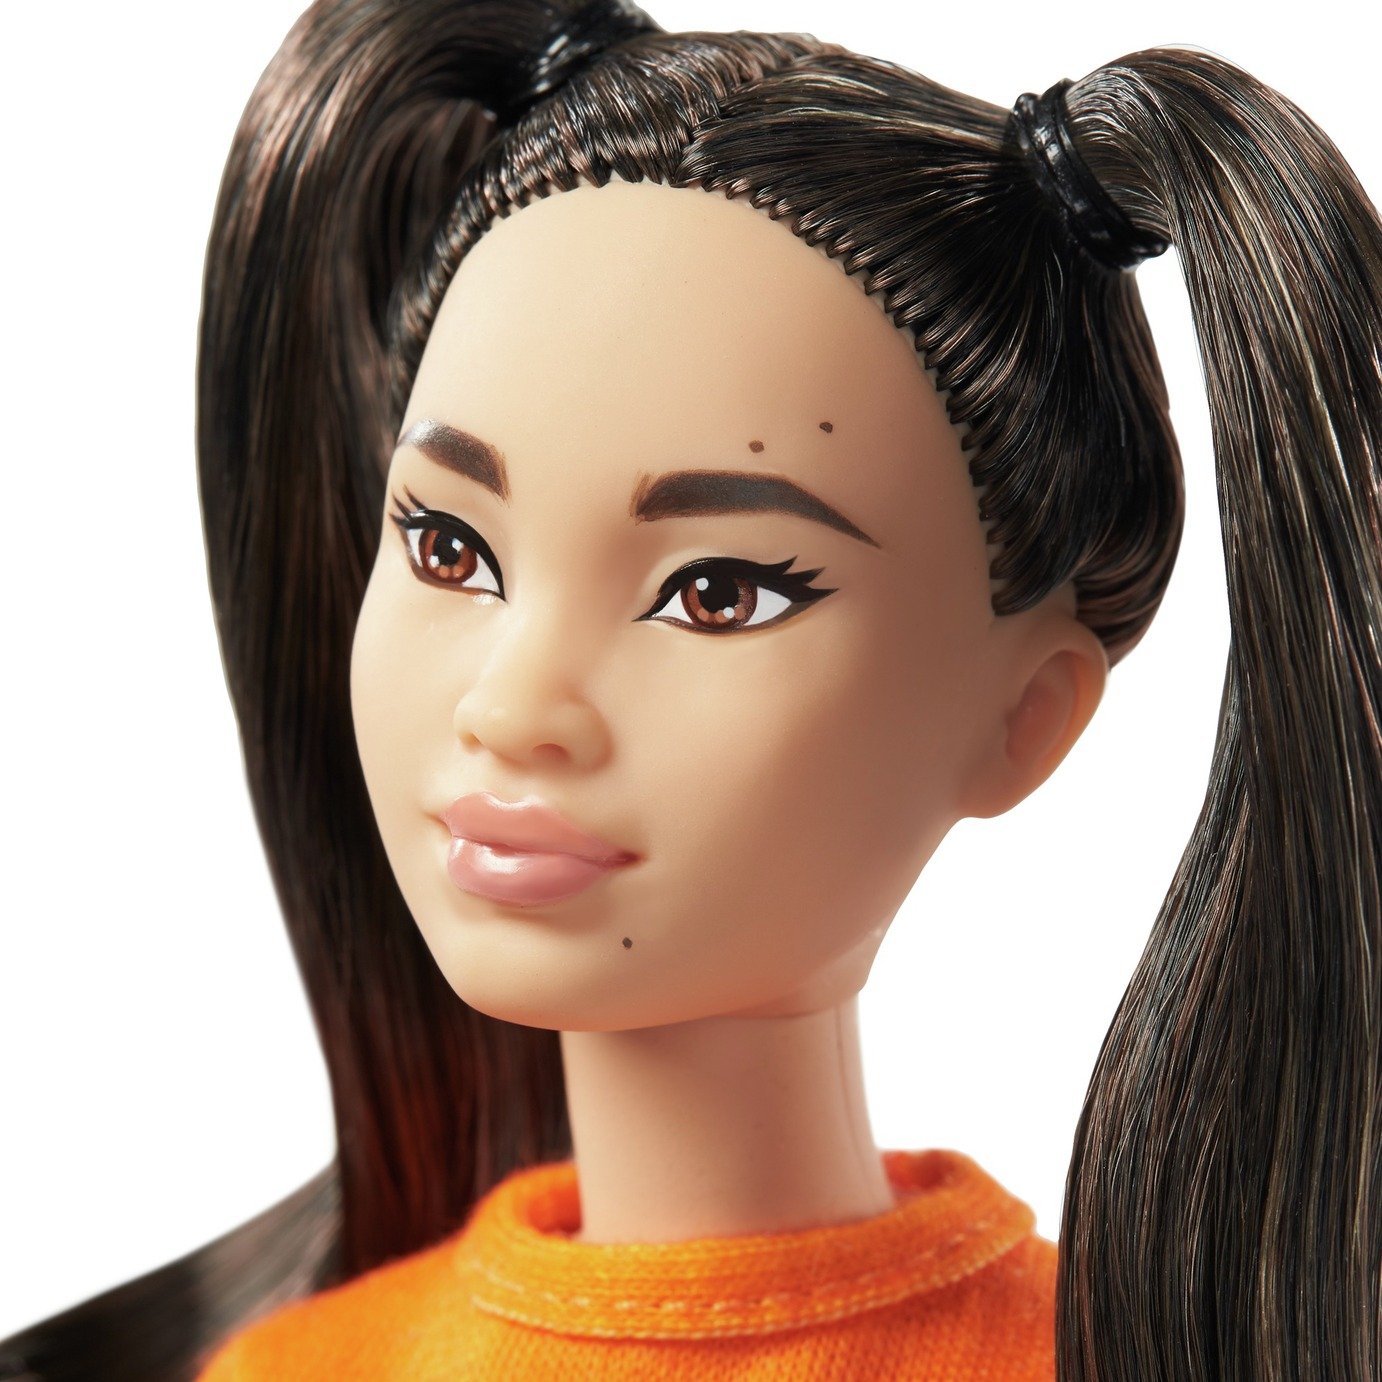 Barbie Fashionista Feelin Bright Doll Review